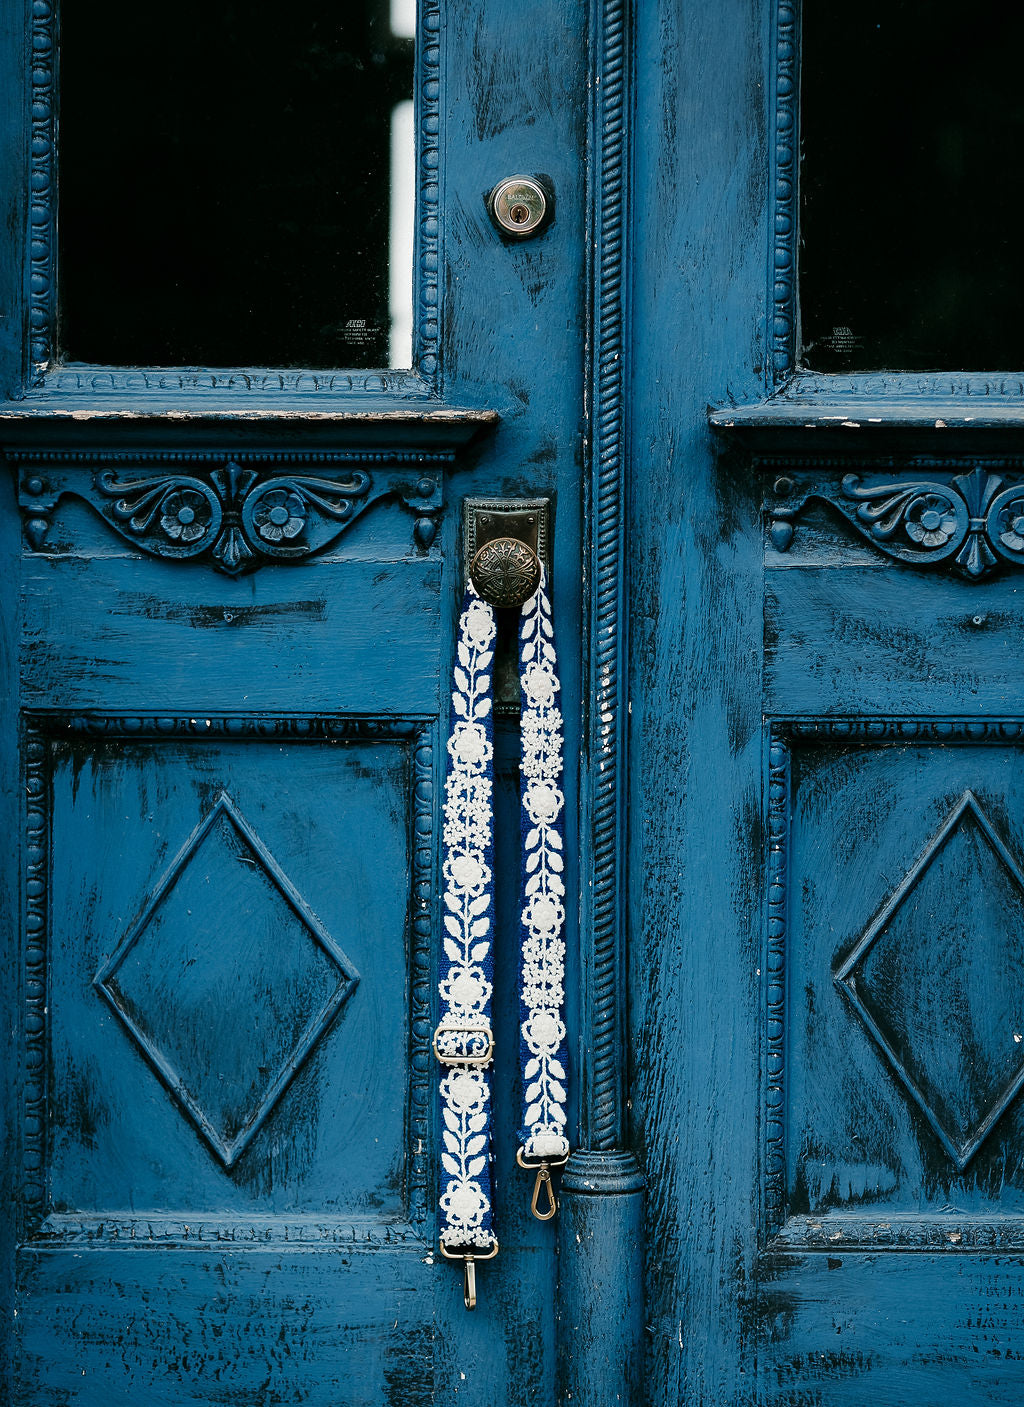 Tess Adjustable Strap displayed hanging on the doorknob of a blue door.